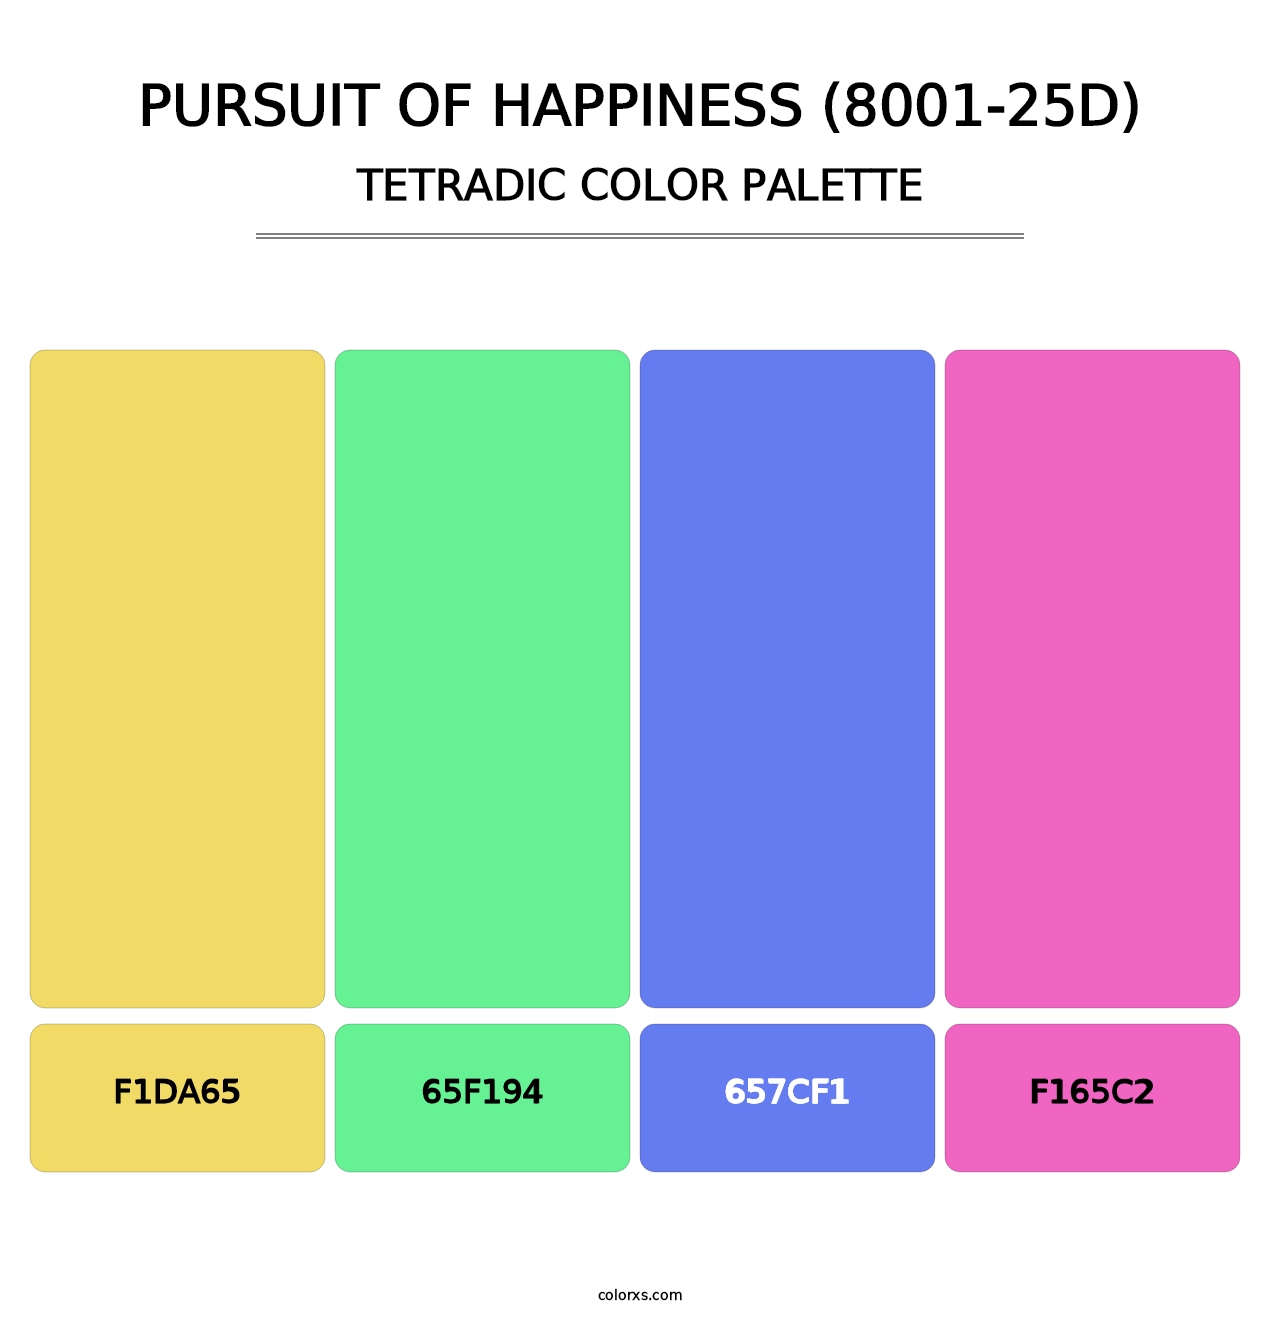 Pursuit of Happiness (8001-25D) - Tetradic Color Palette